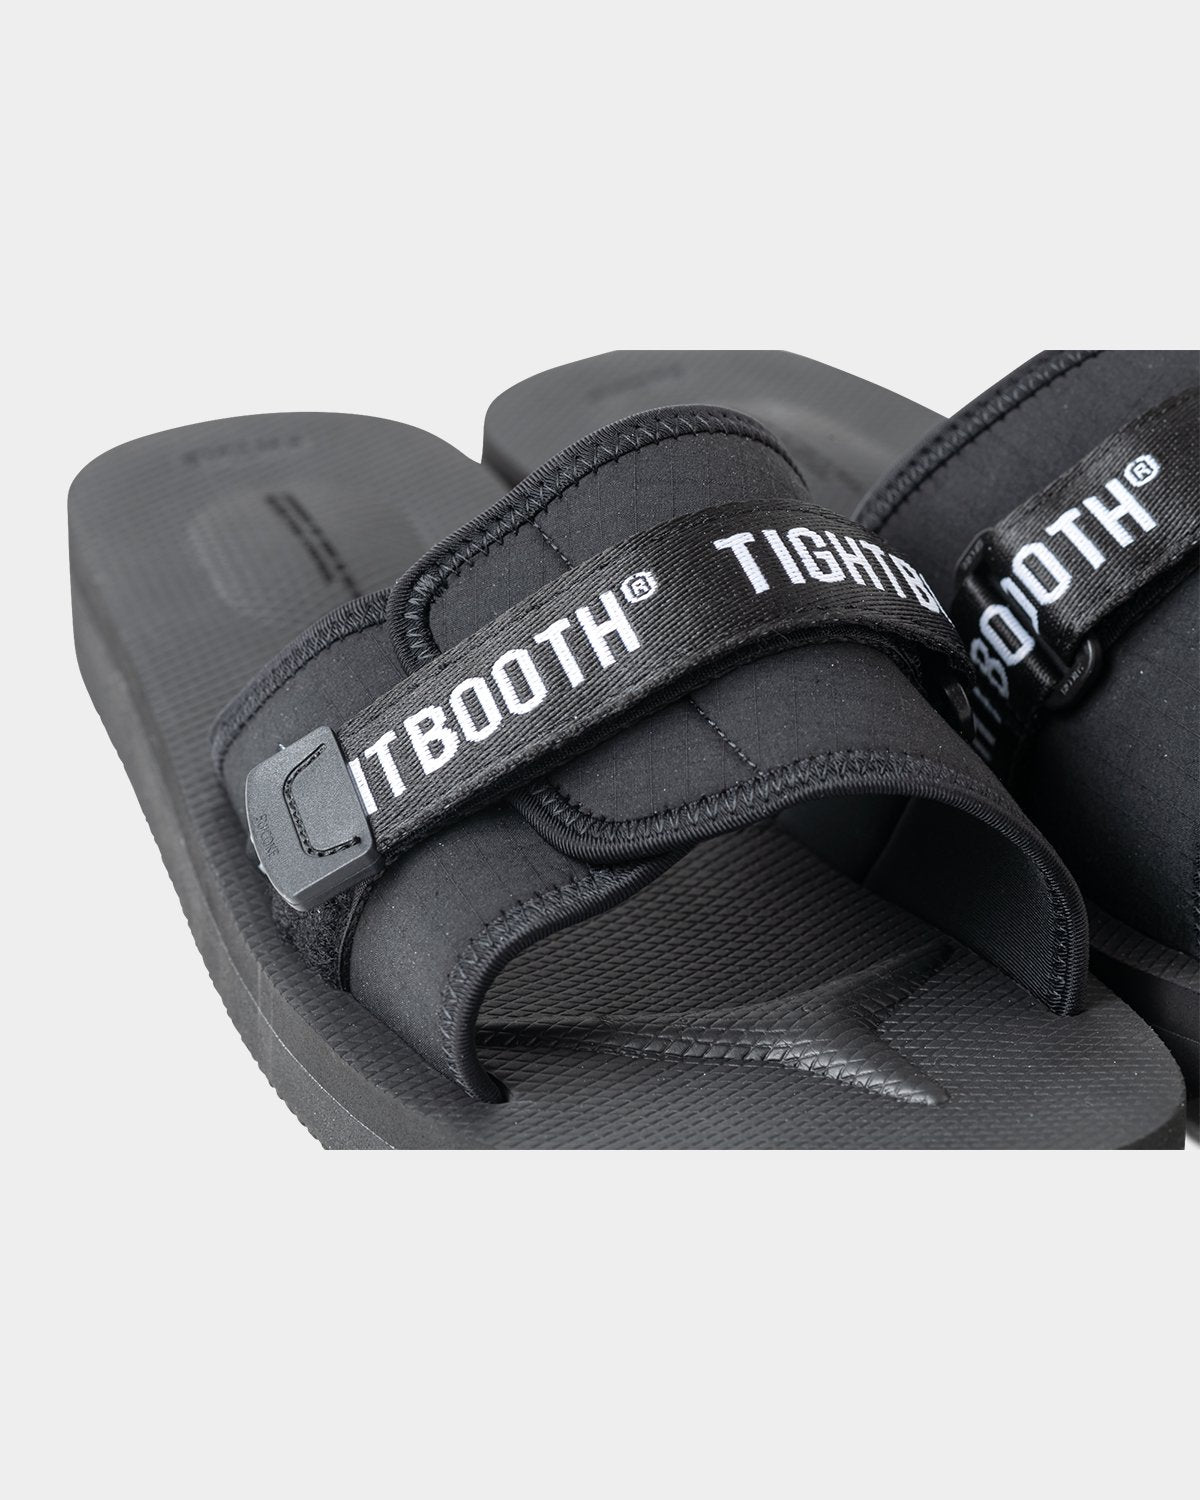 TIGHTBOOTH × SUICOKE PADRI Sandals